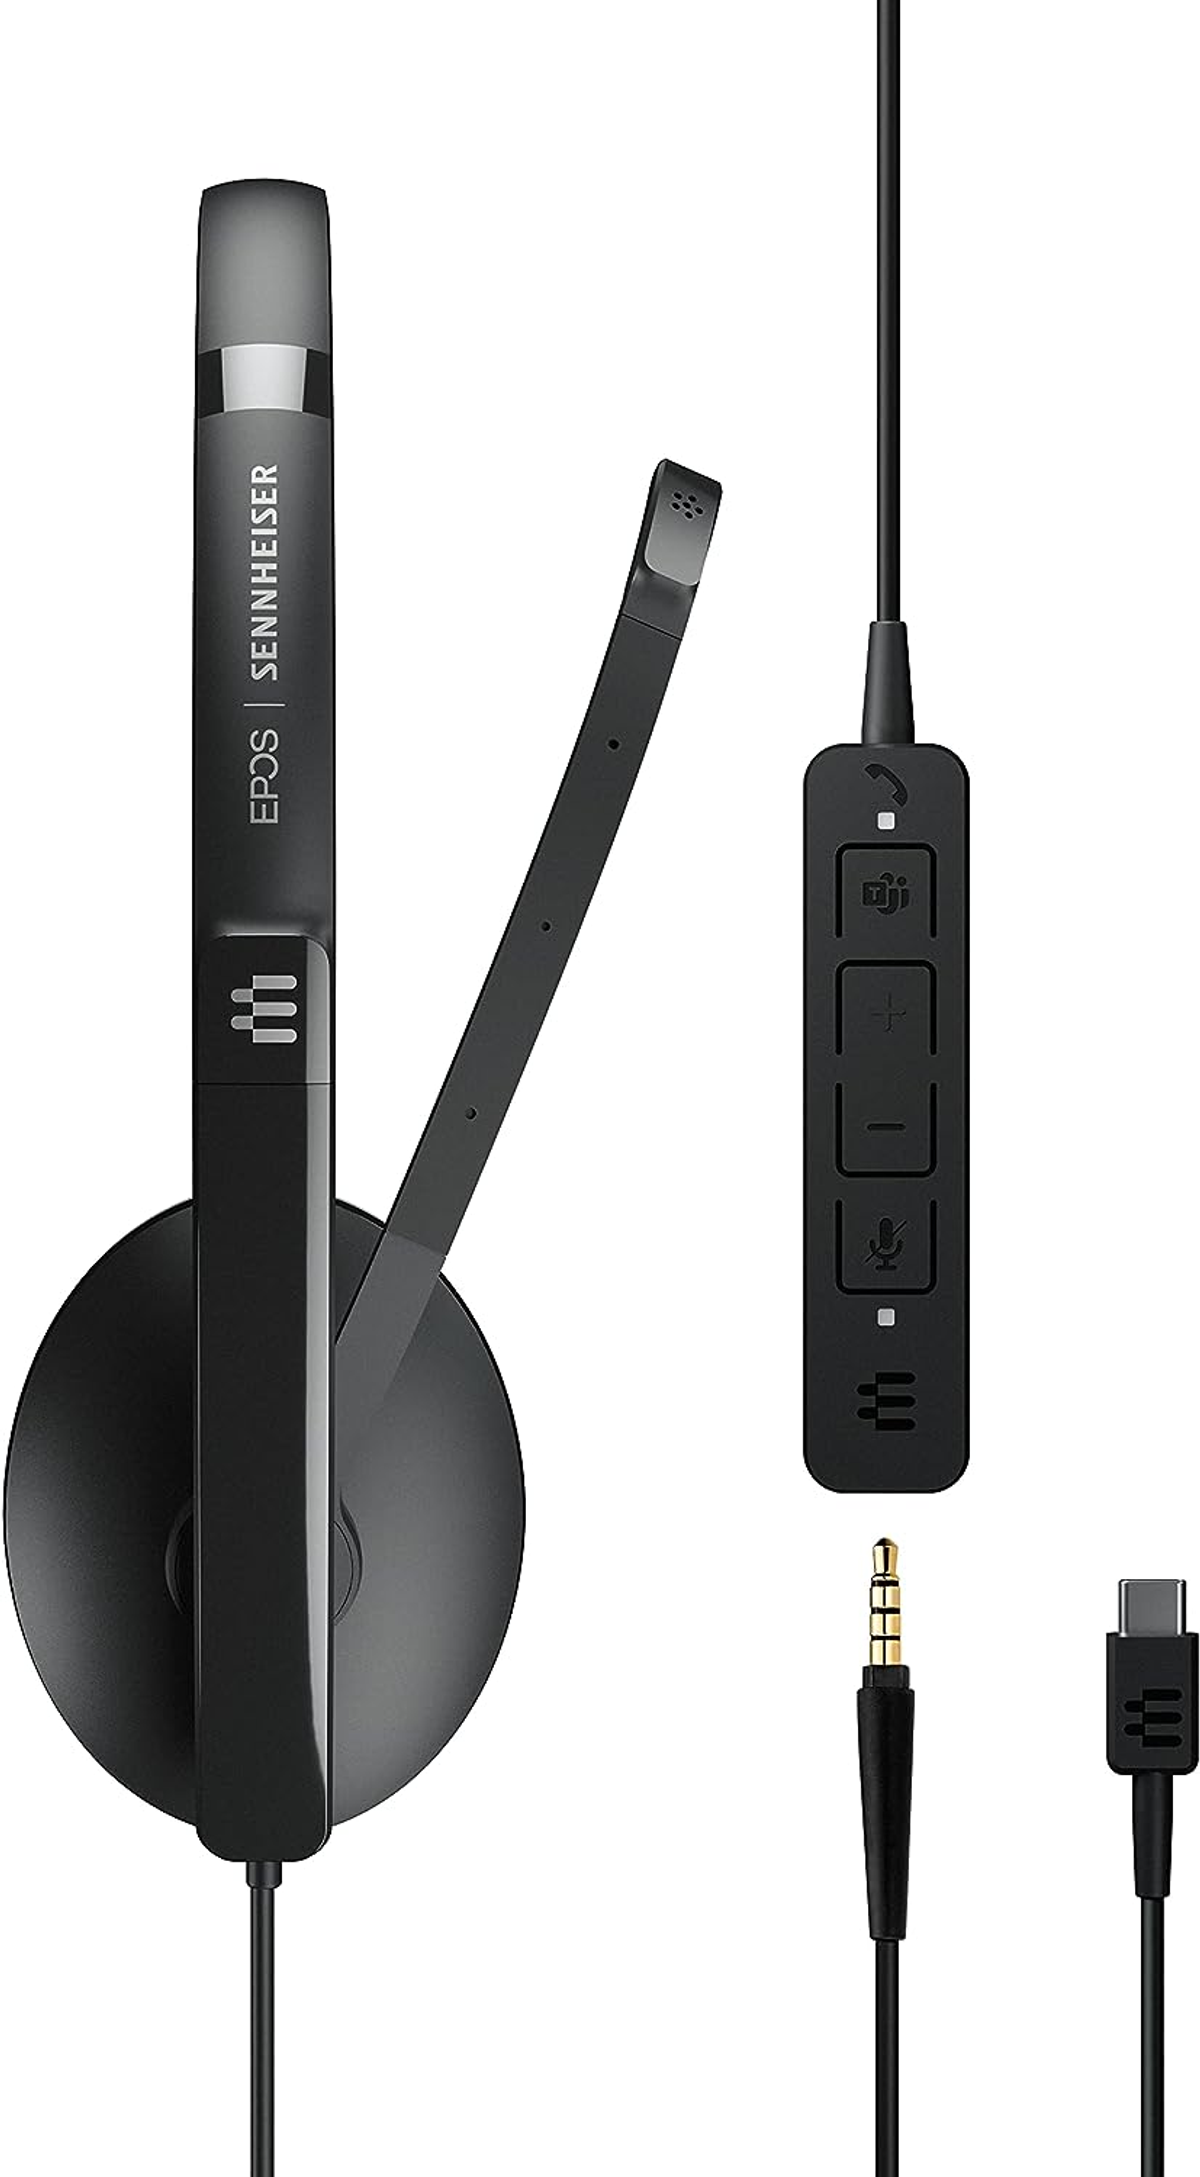 EPOS ADAPT 165T Schwarz Headset On-ear II, USB-C